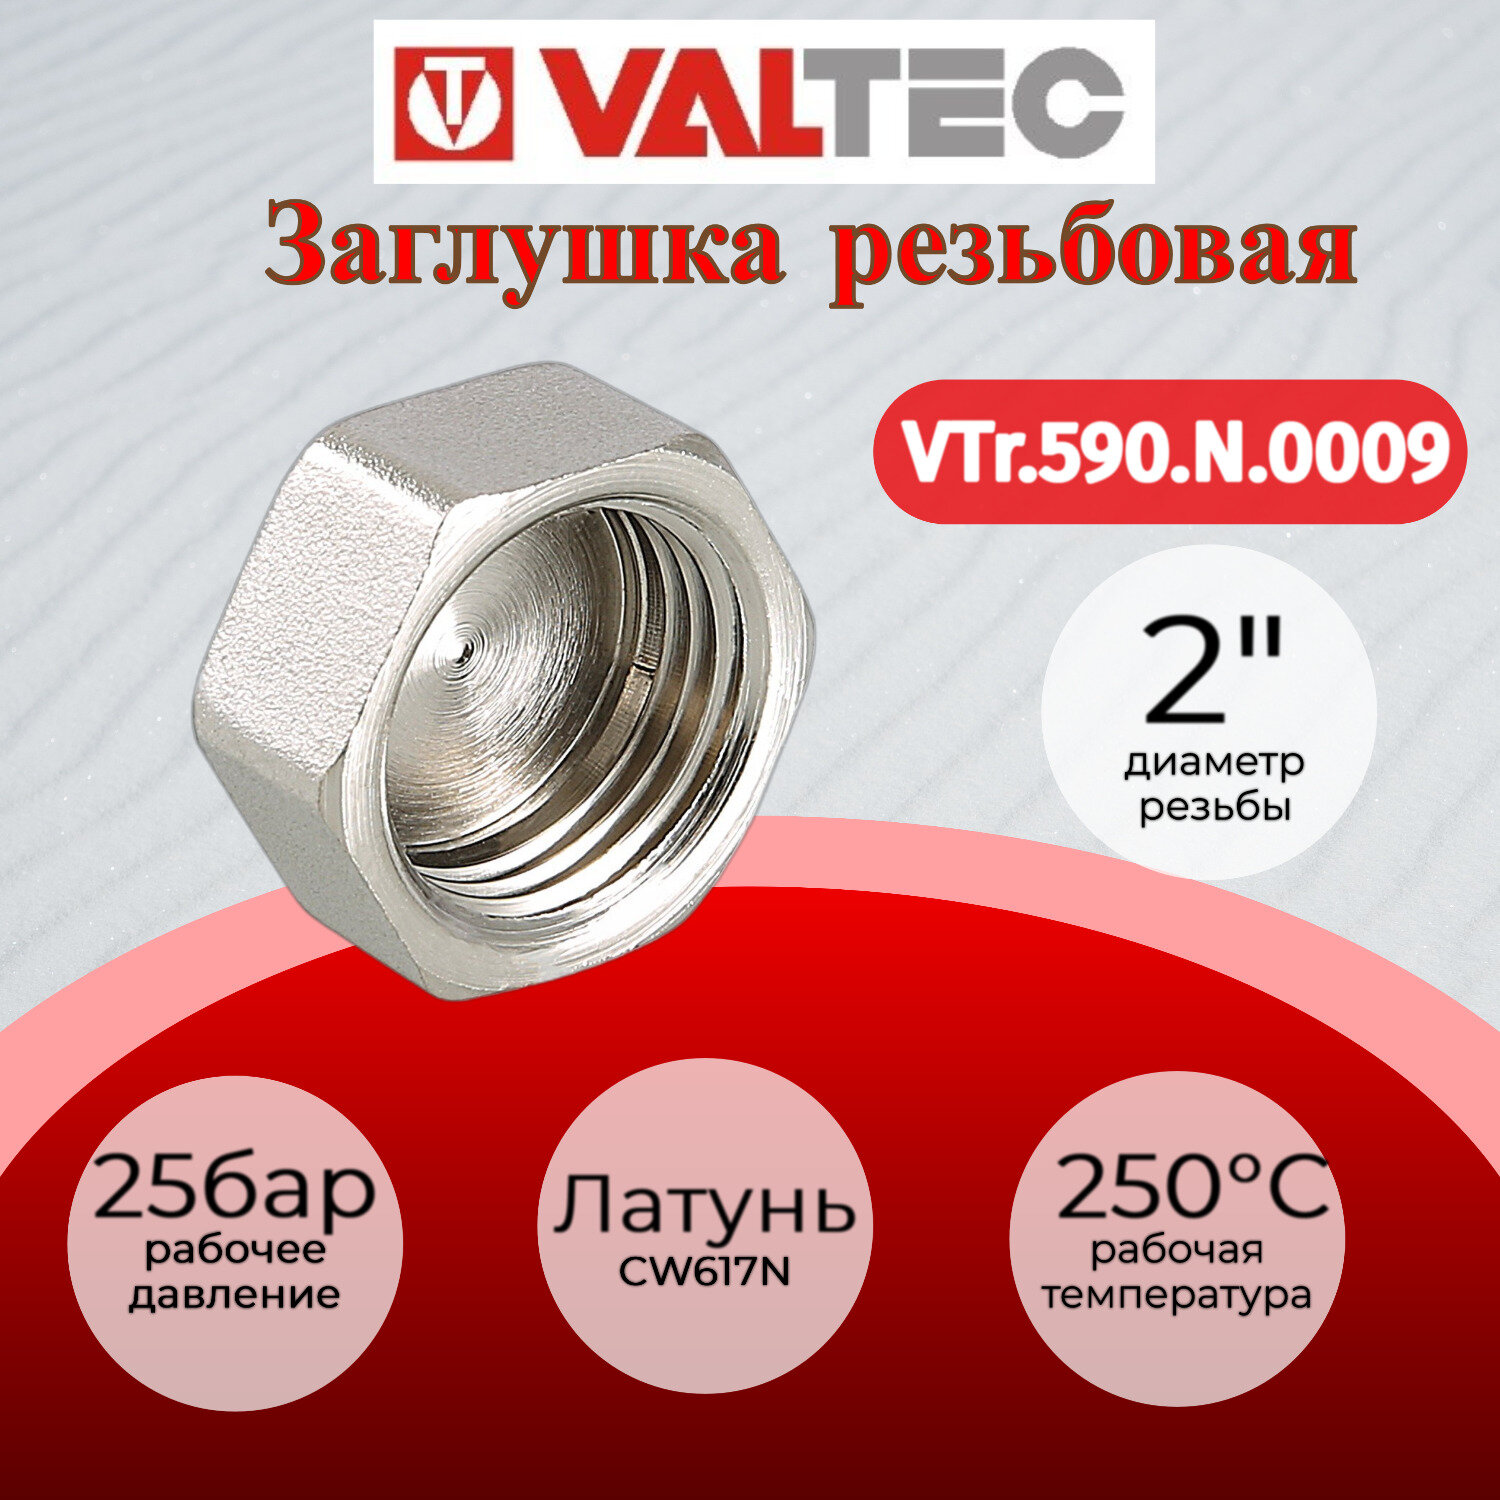 Заглушка 2" внутренняя резьба VALTEC VTr.590. N.0009